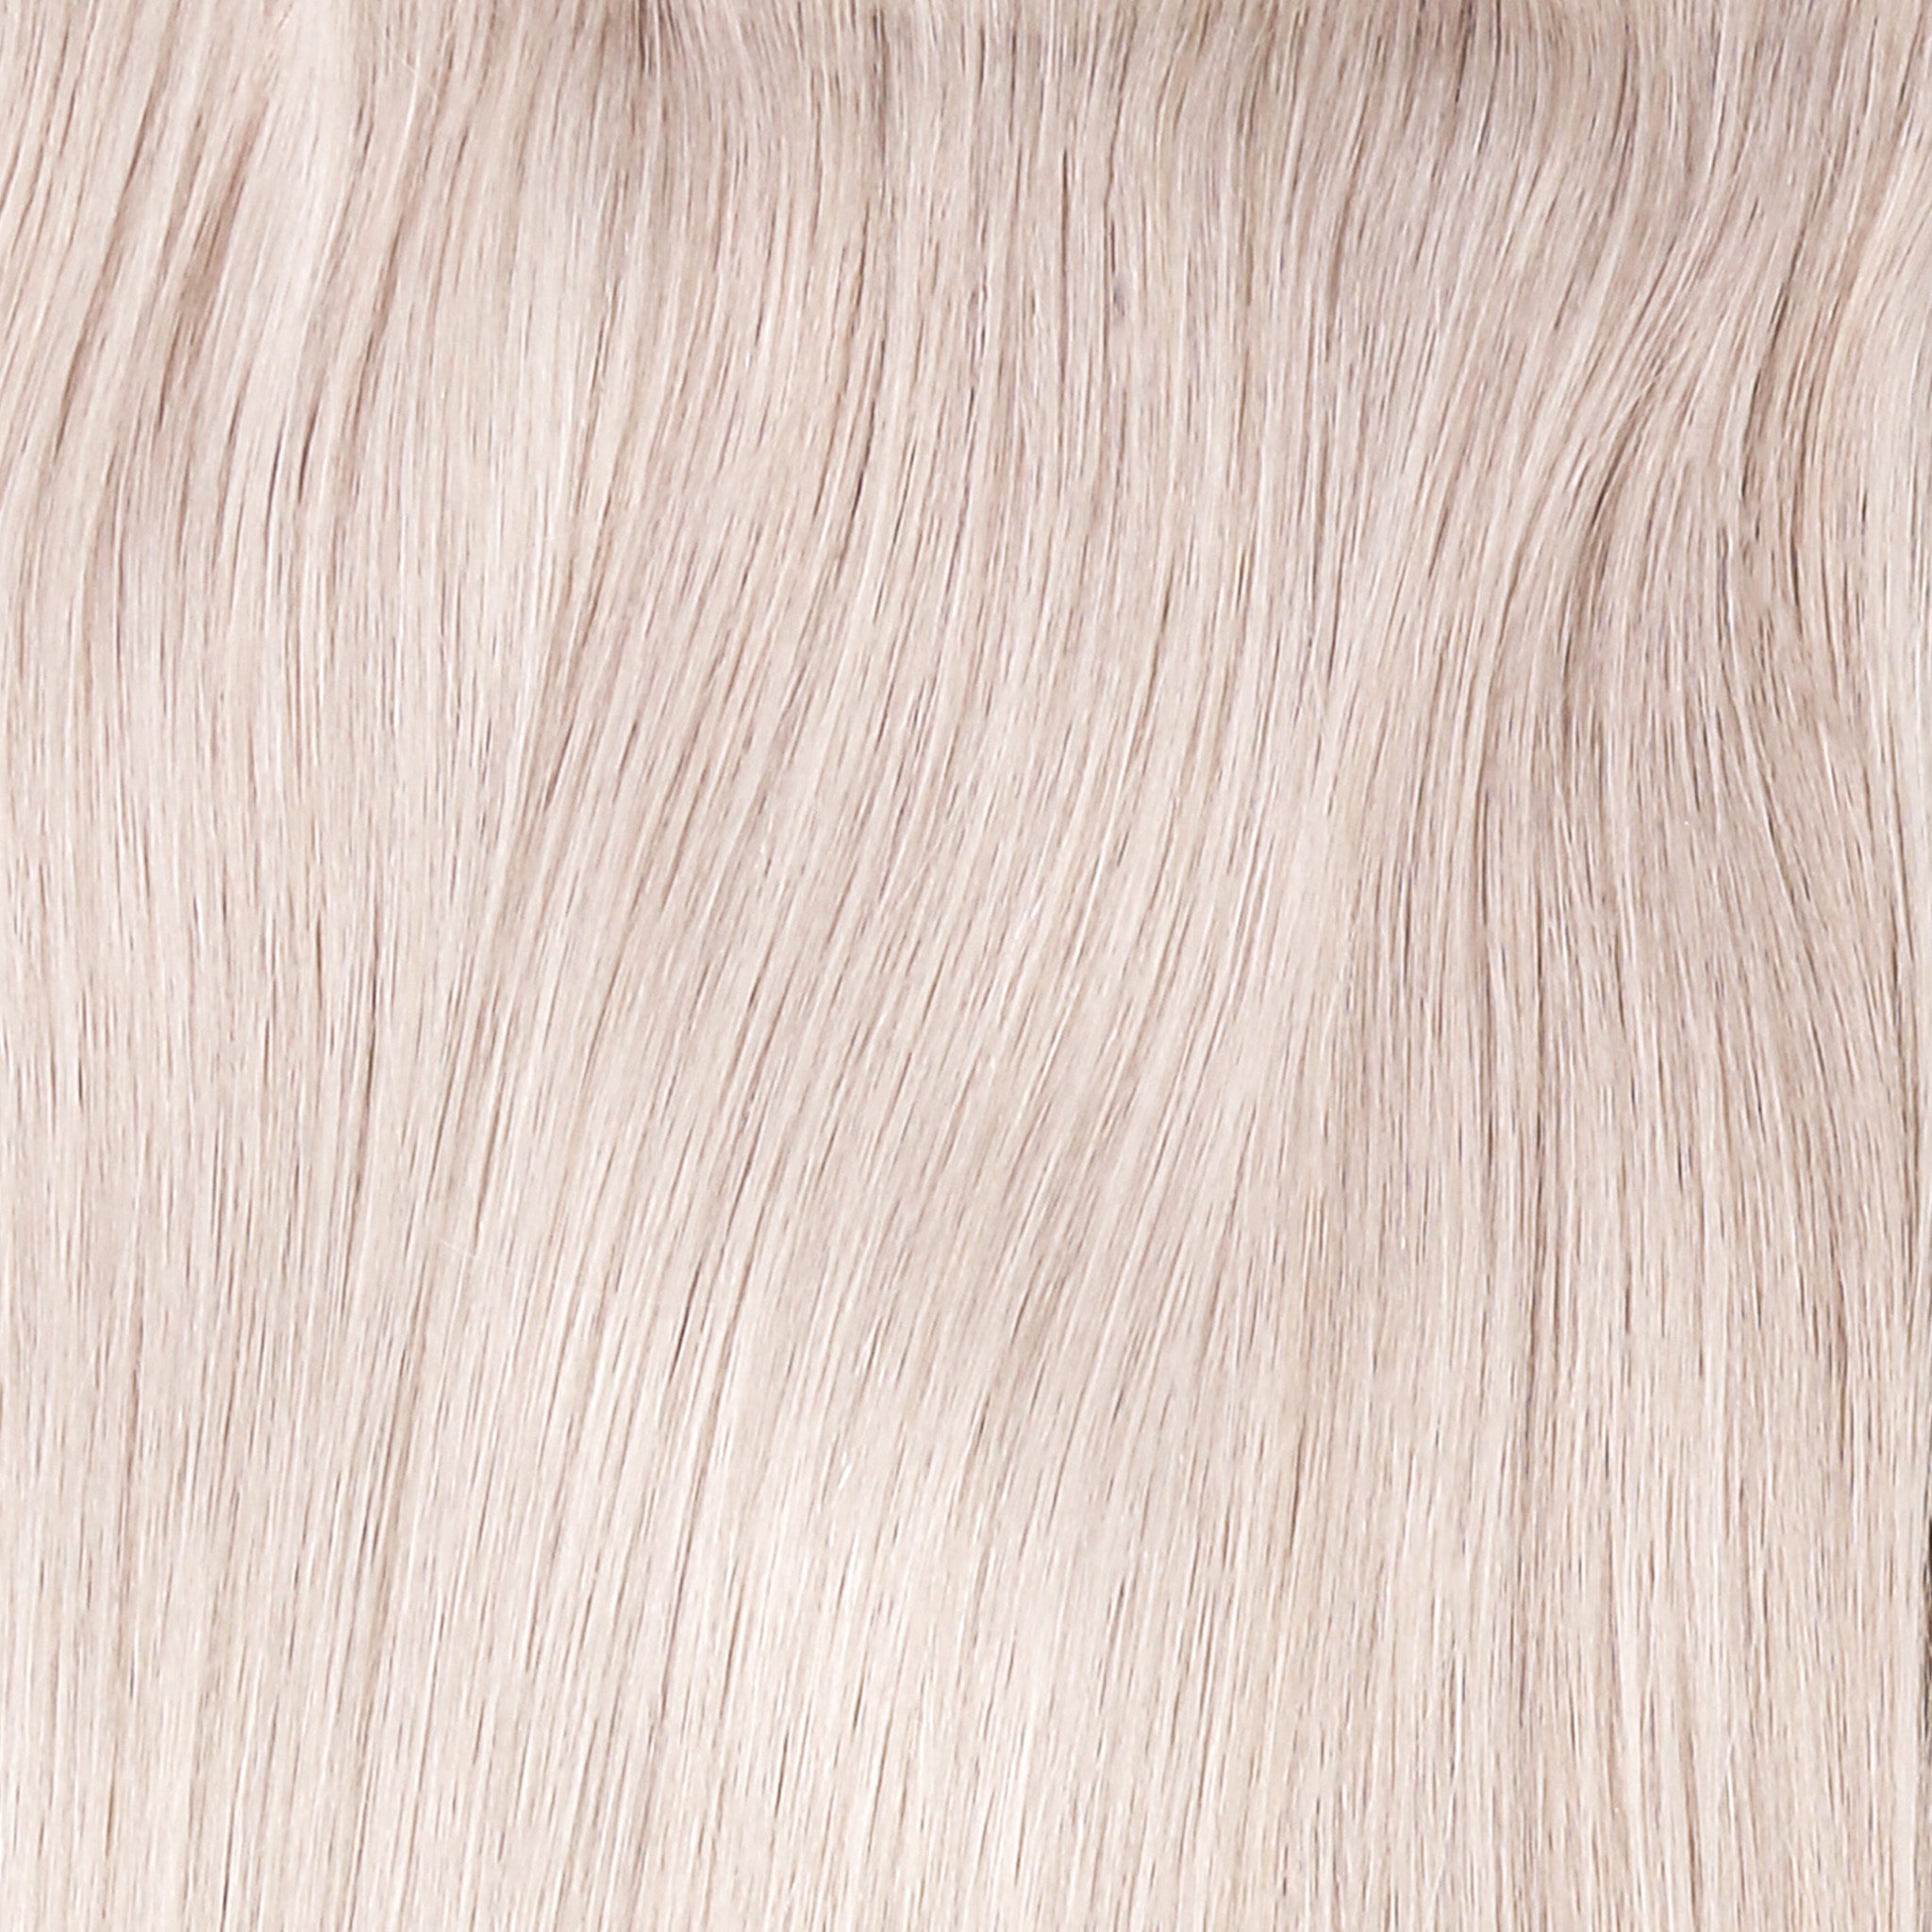 #62 Ponytail Hair Extension